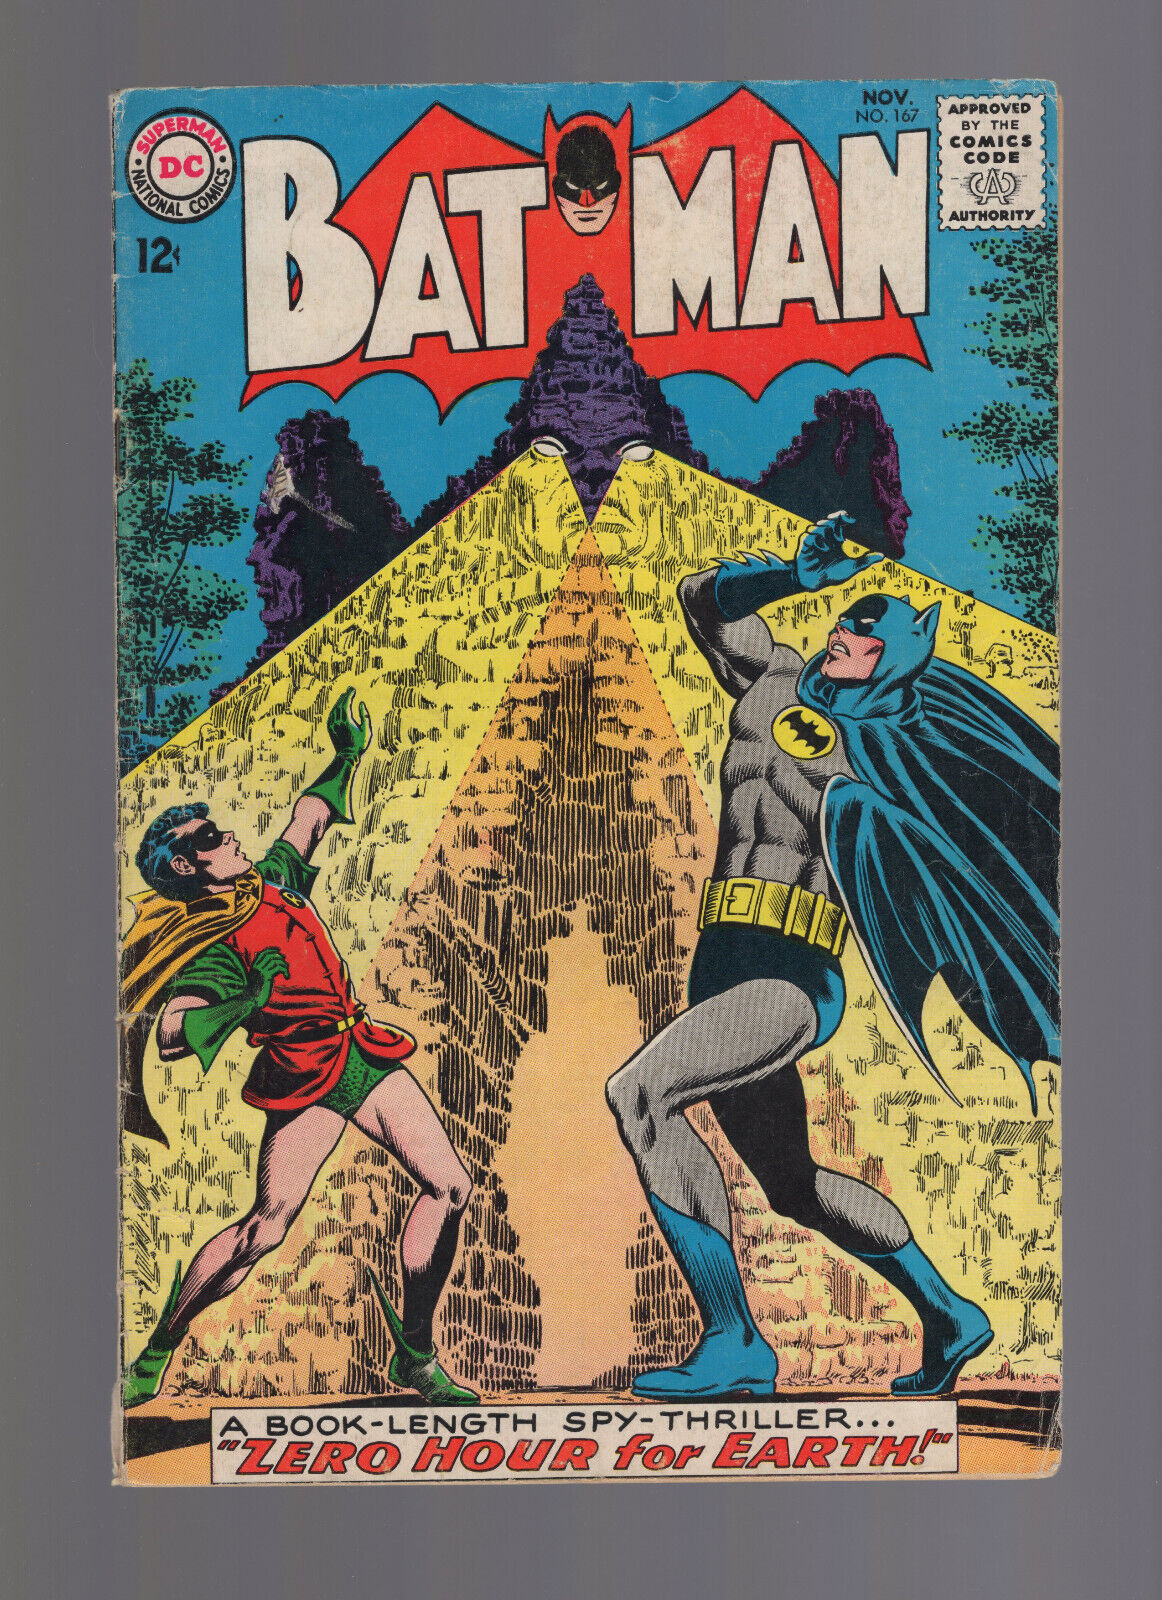 Batman #167 - DC Comics 1964 - Sheldon Moldoff Artwork - Lower Grade